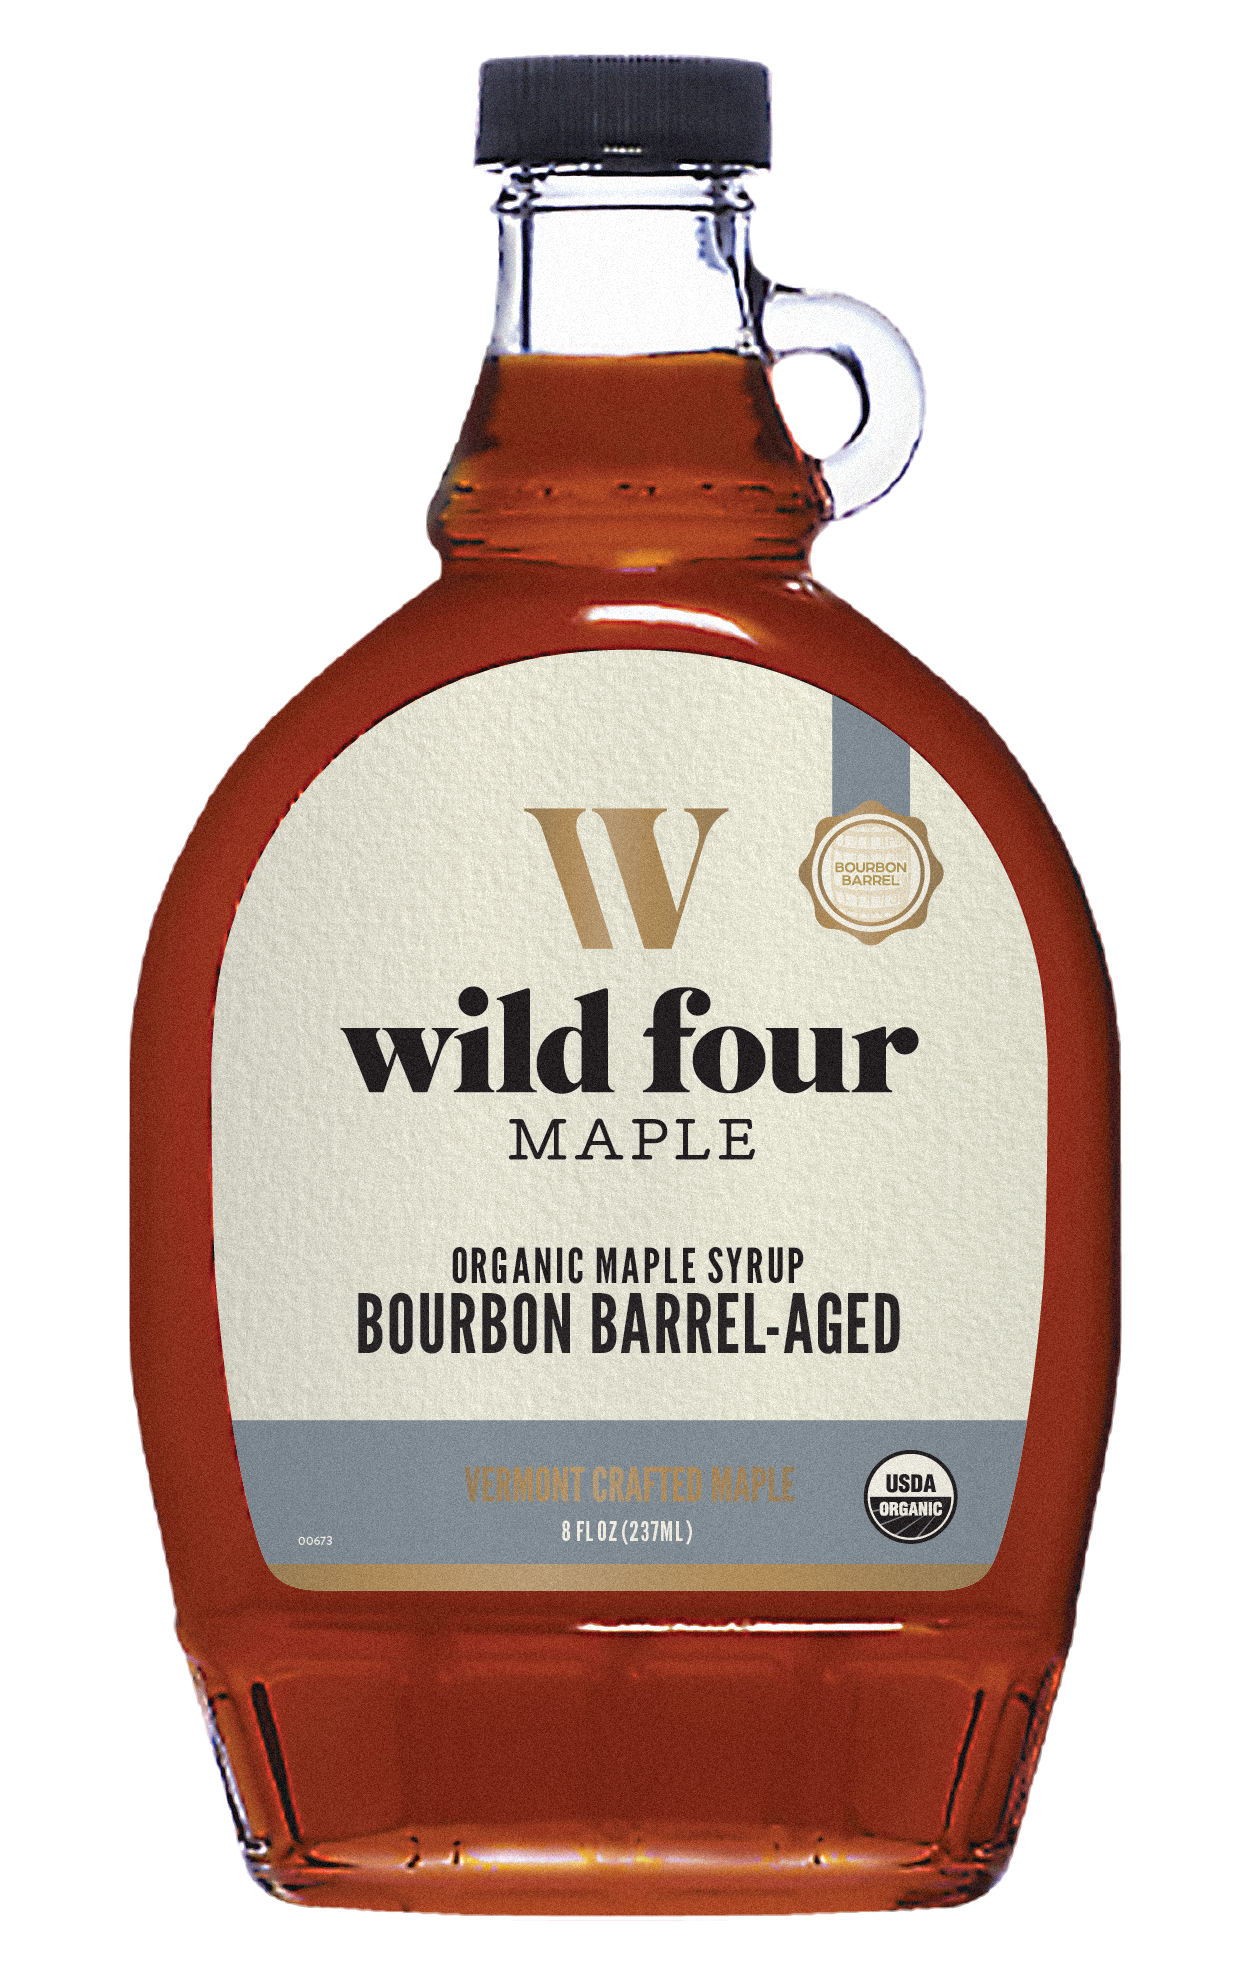 Wild Four Bourbon Barrel Aged Maple Syrup 12 units per case 8.0 fl